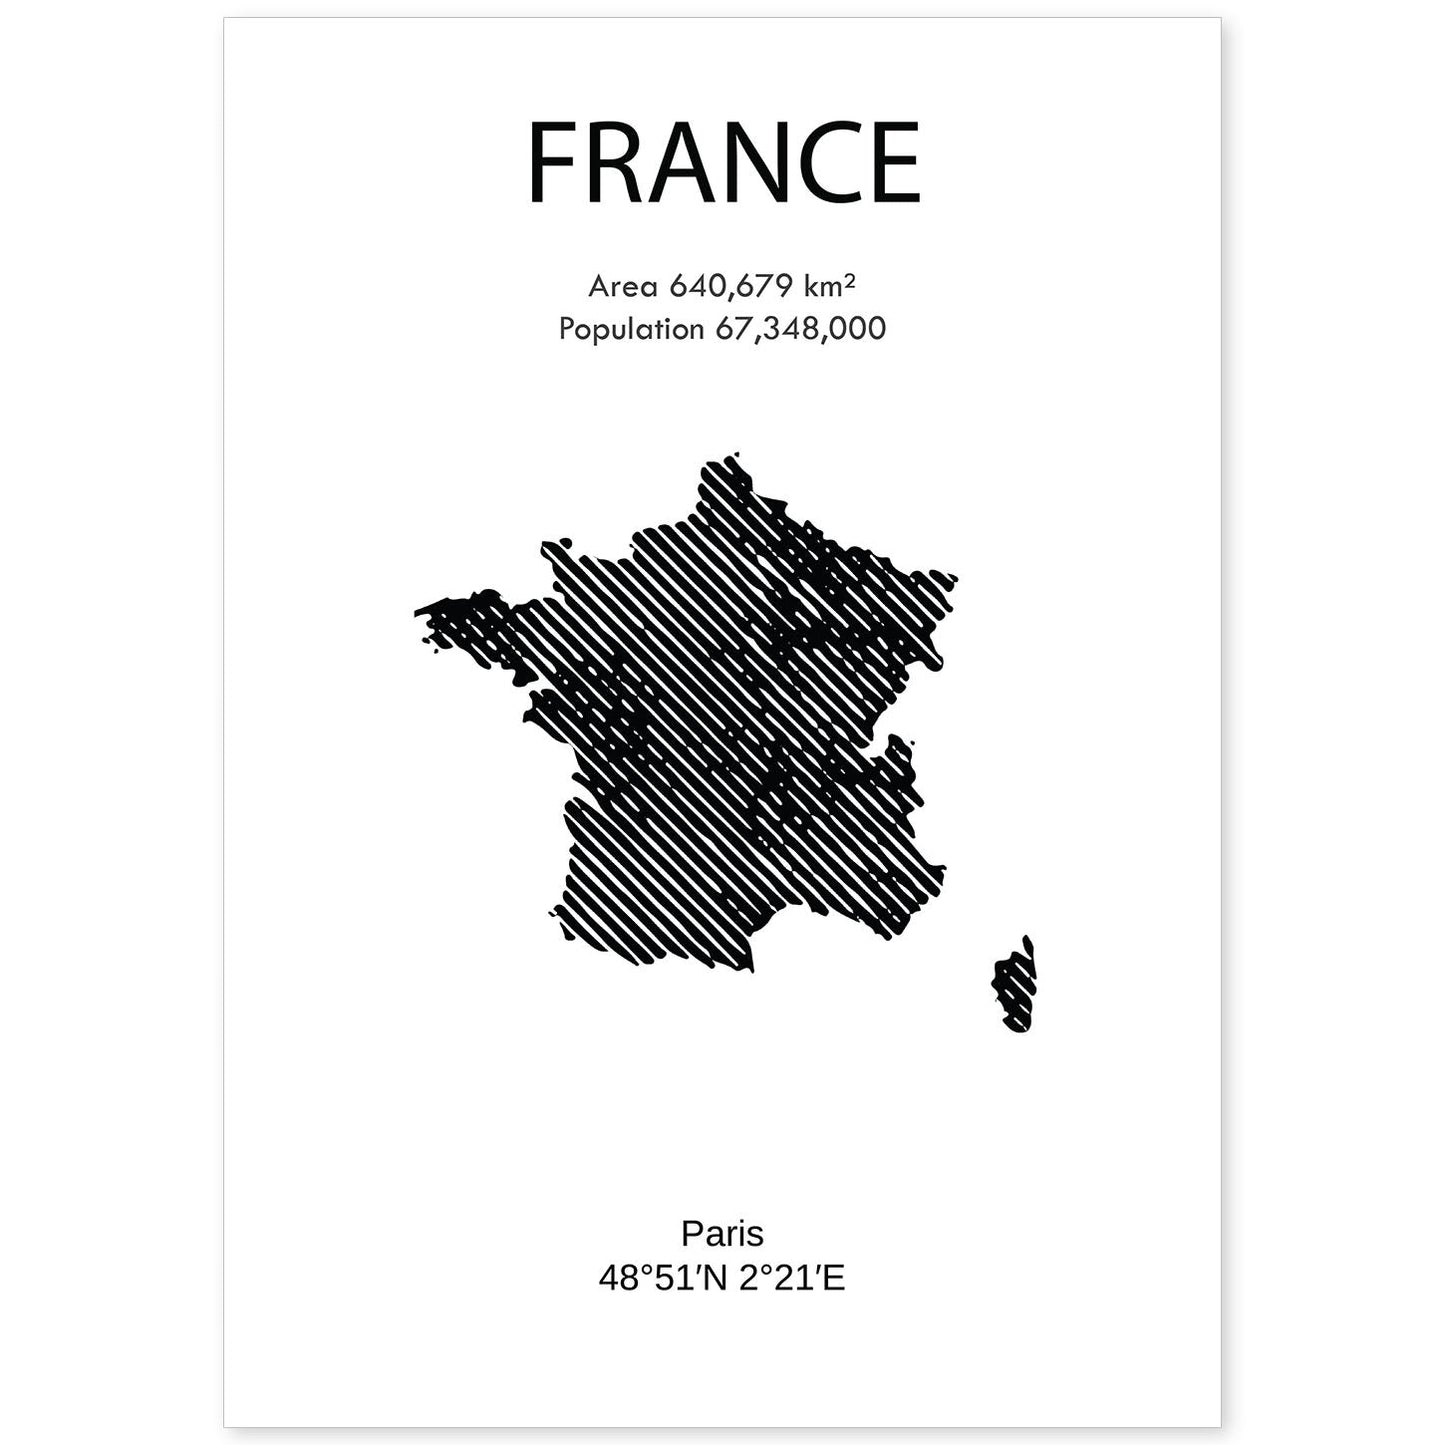 Poster de Francia. Láminas de paises y continentes del mundo.-Artwork-Nacnic-A4-Sin marco-Nacnic Estudio SL